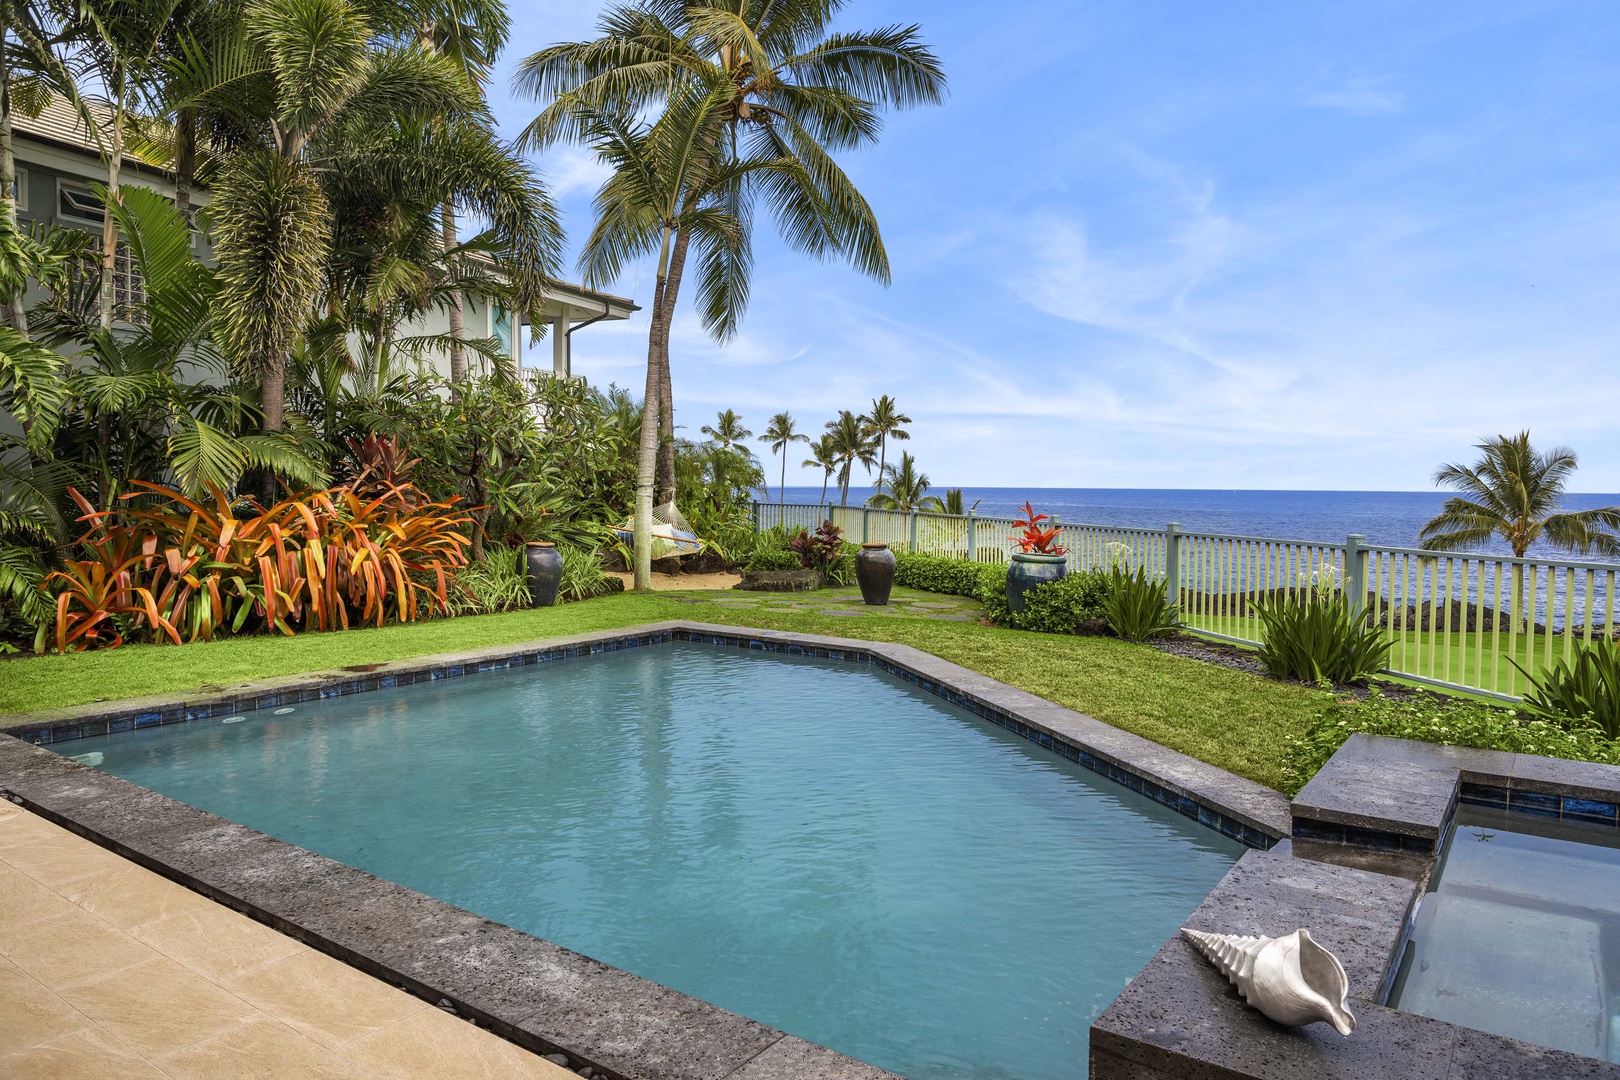 Kailua Kona Vacation Rentals, Holua Kai #20 - Pool with lush tropical surroundings